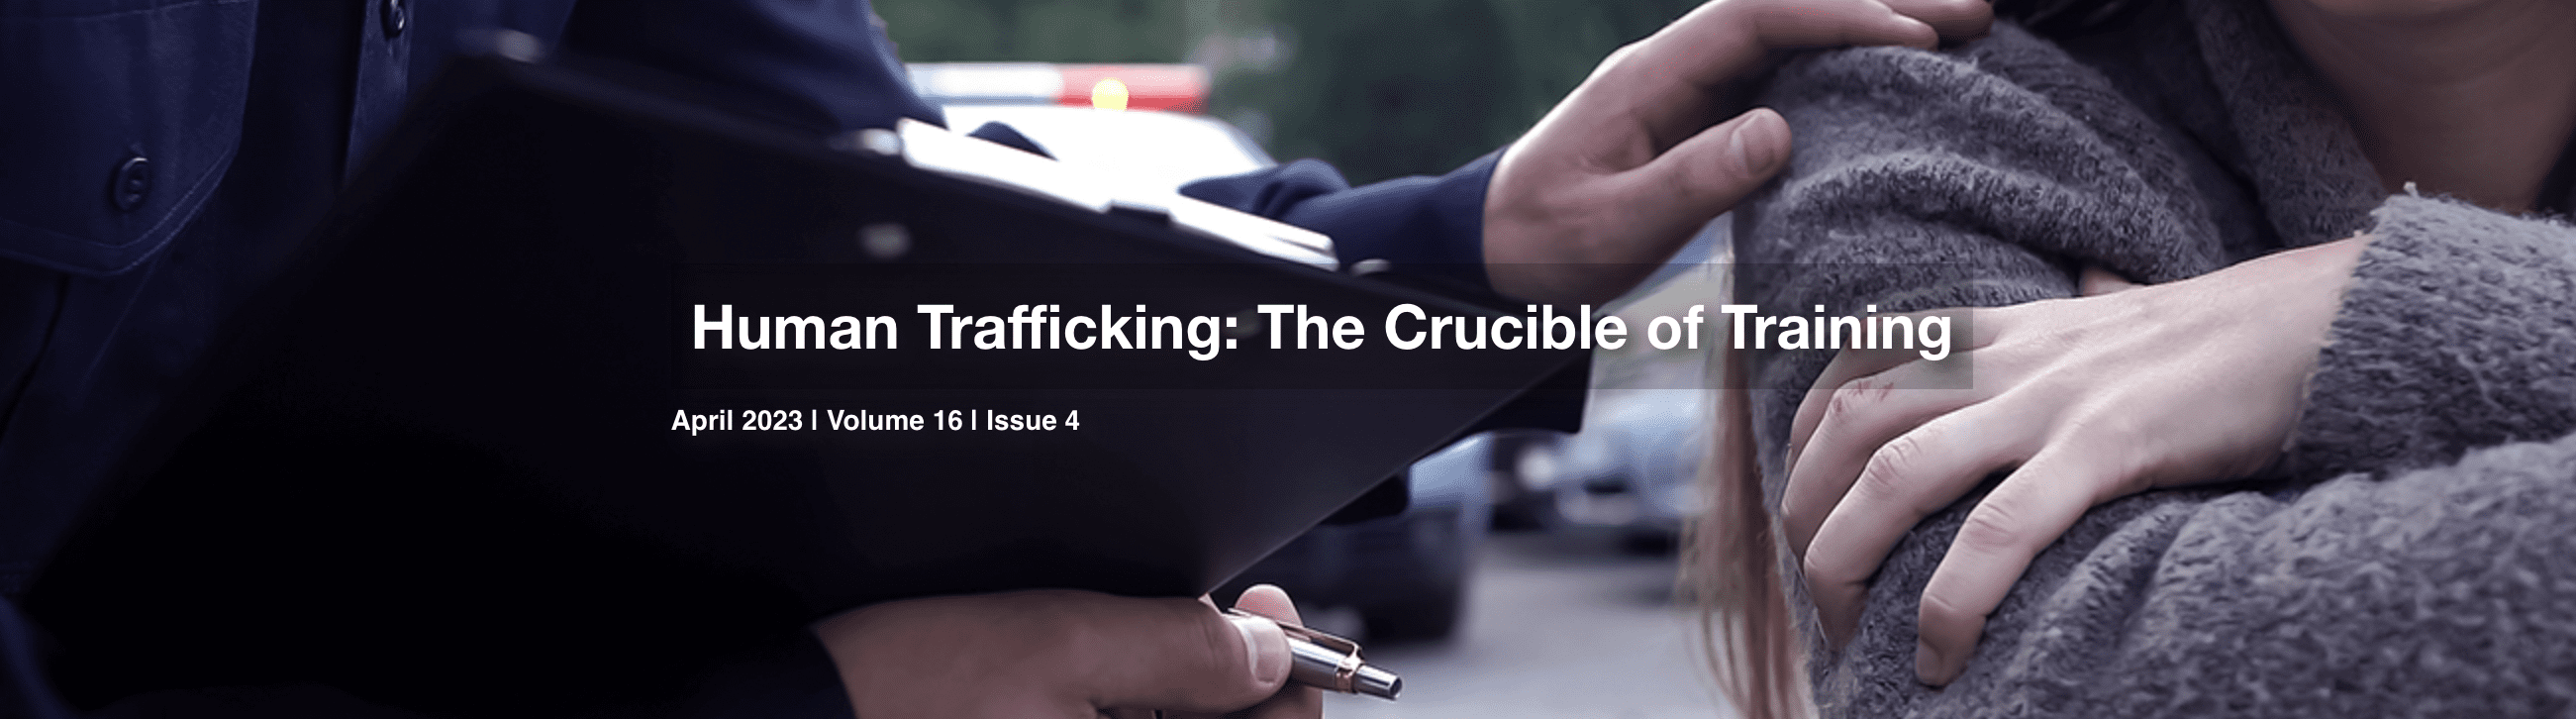 Human Trafficking: The Crucible of Training